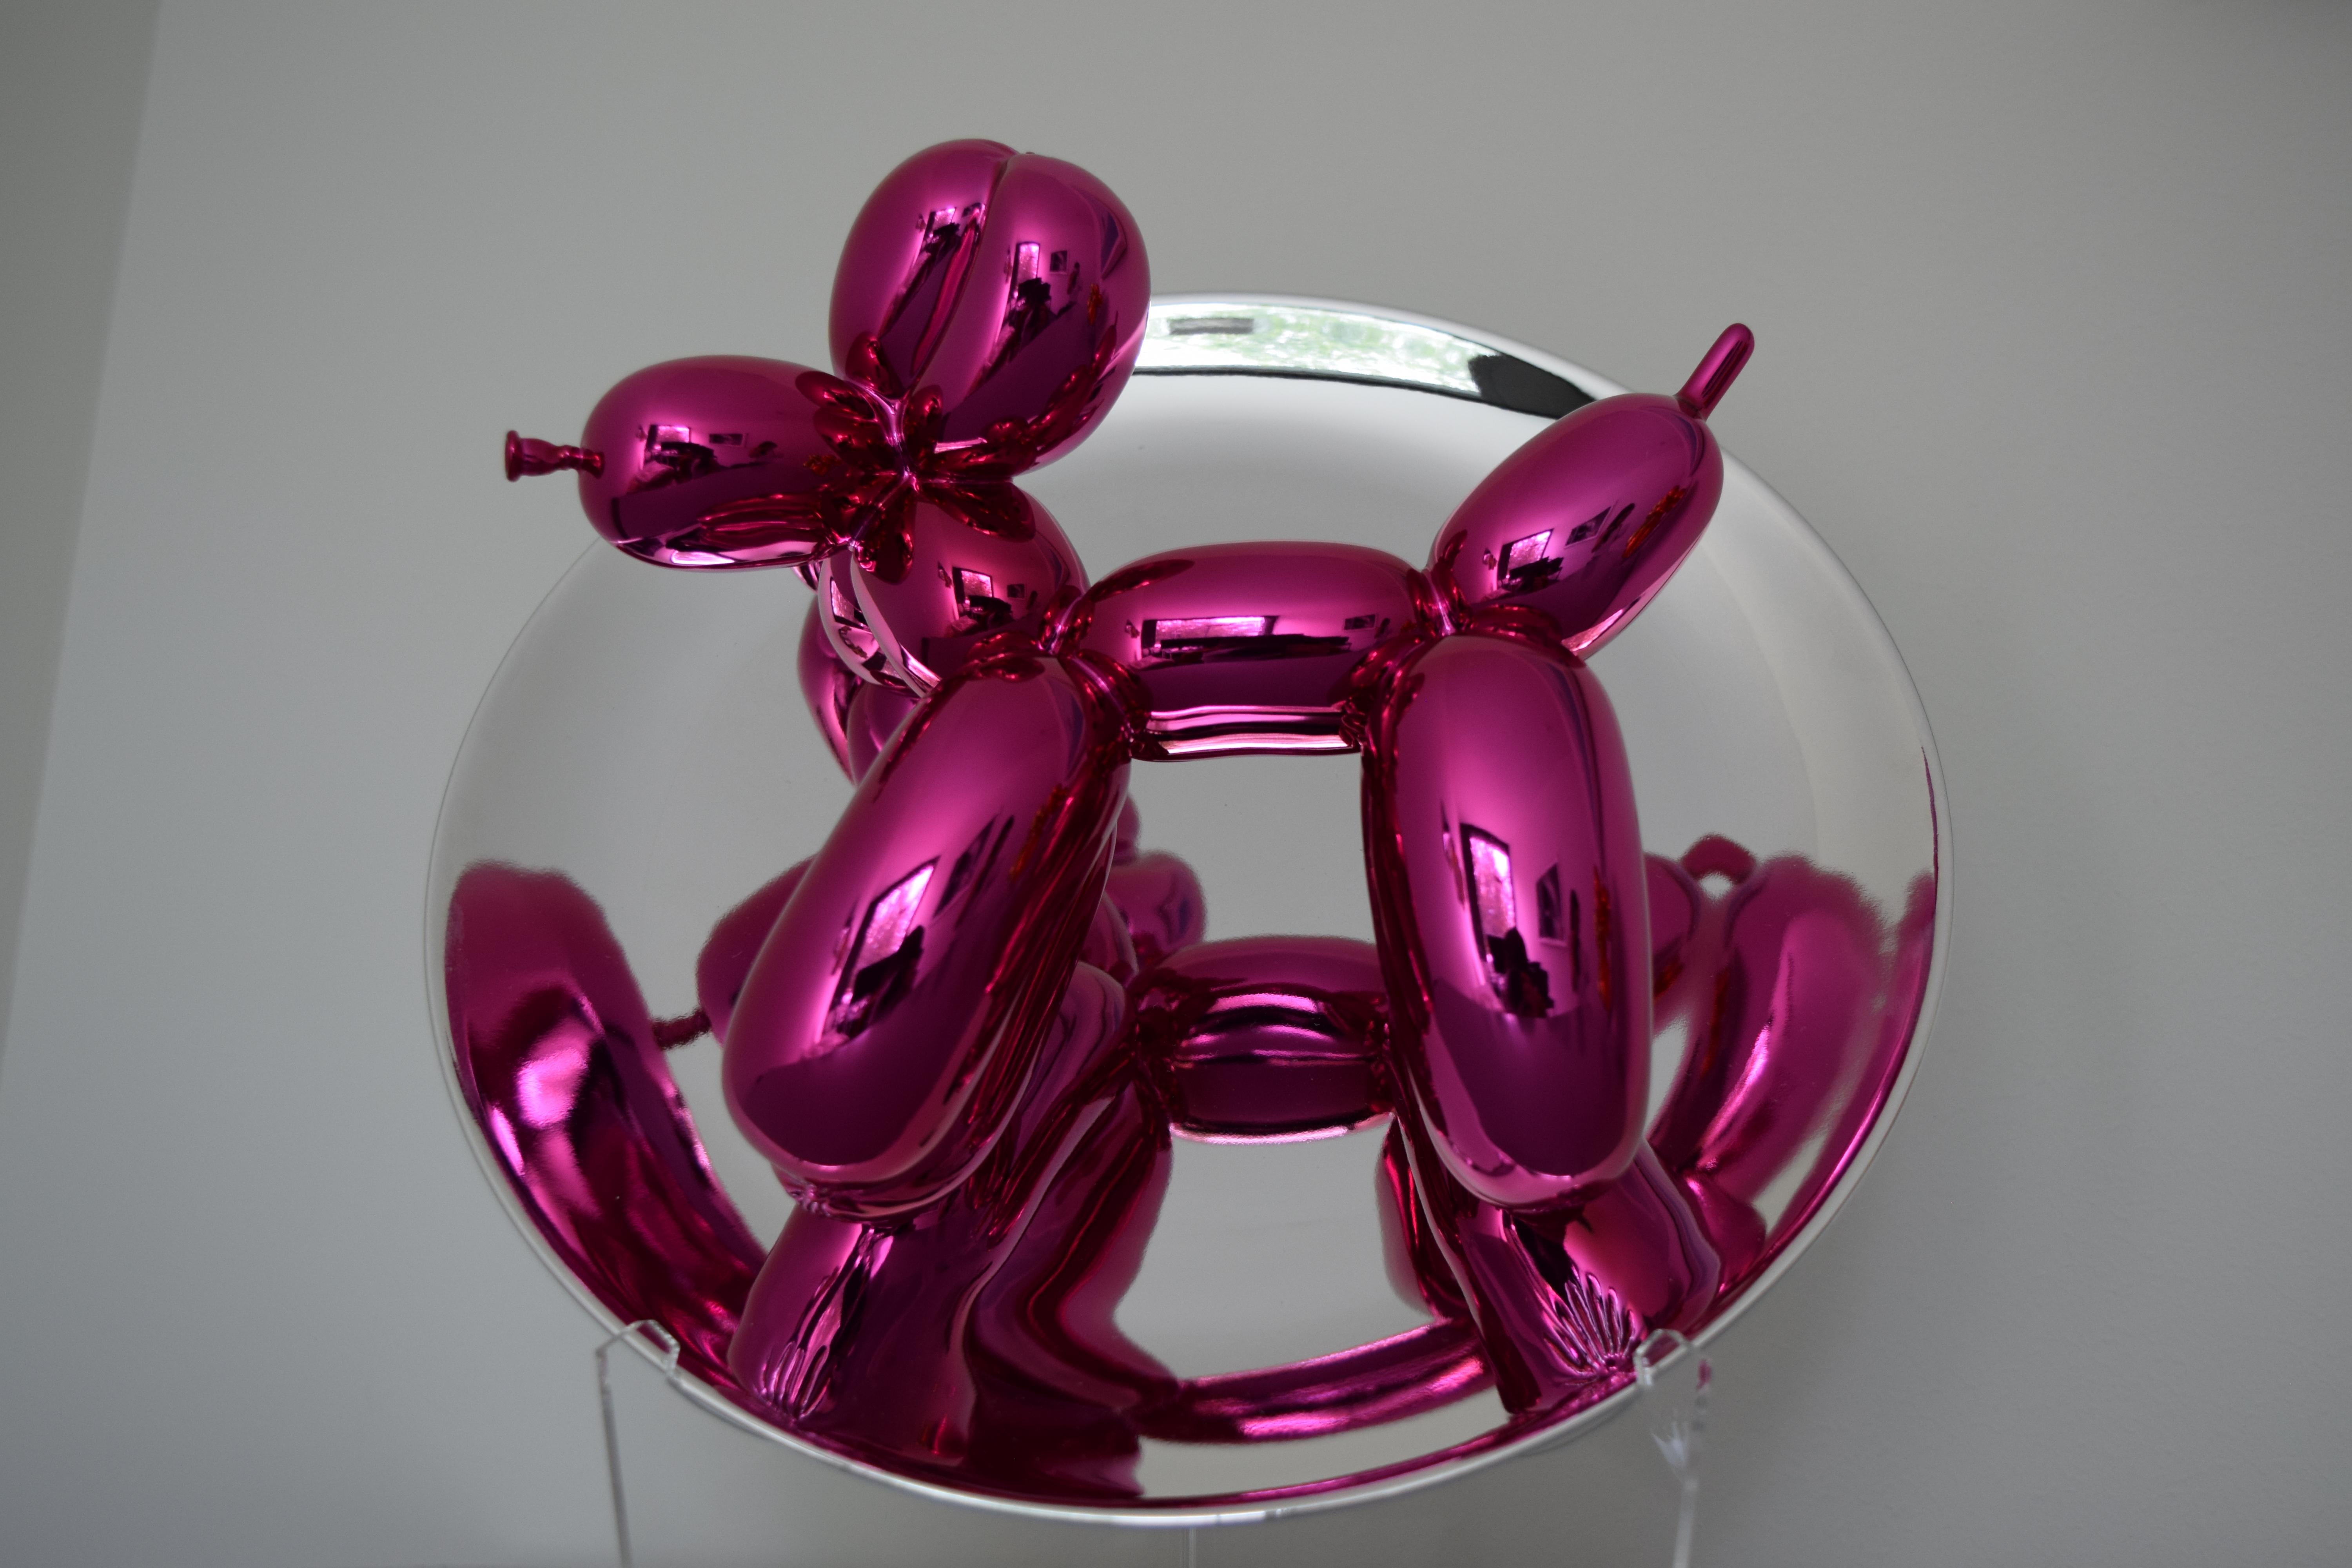 Ballonhund (Magenta) - Jeff Koons, Zeitgenössisch, Porzellan, Skulptur, Dekor 6